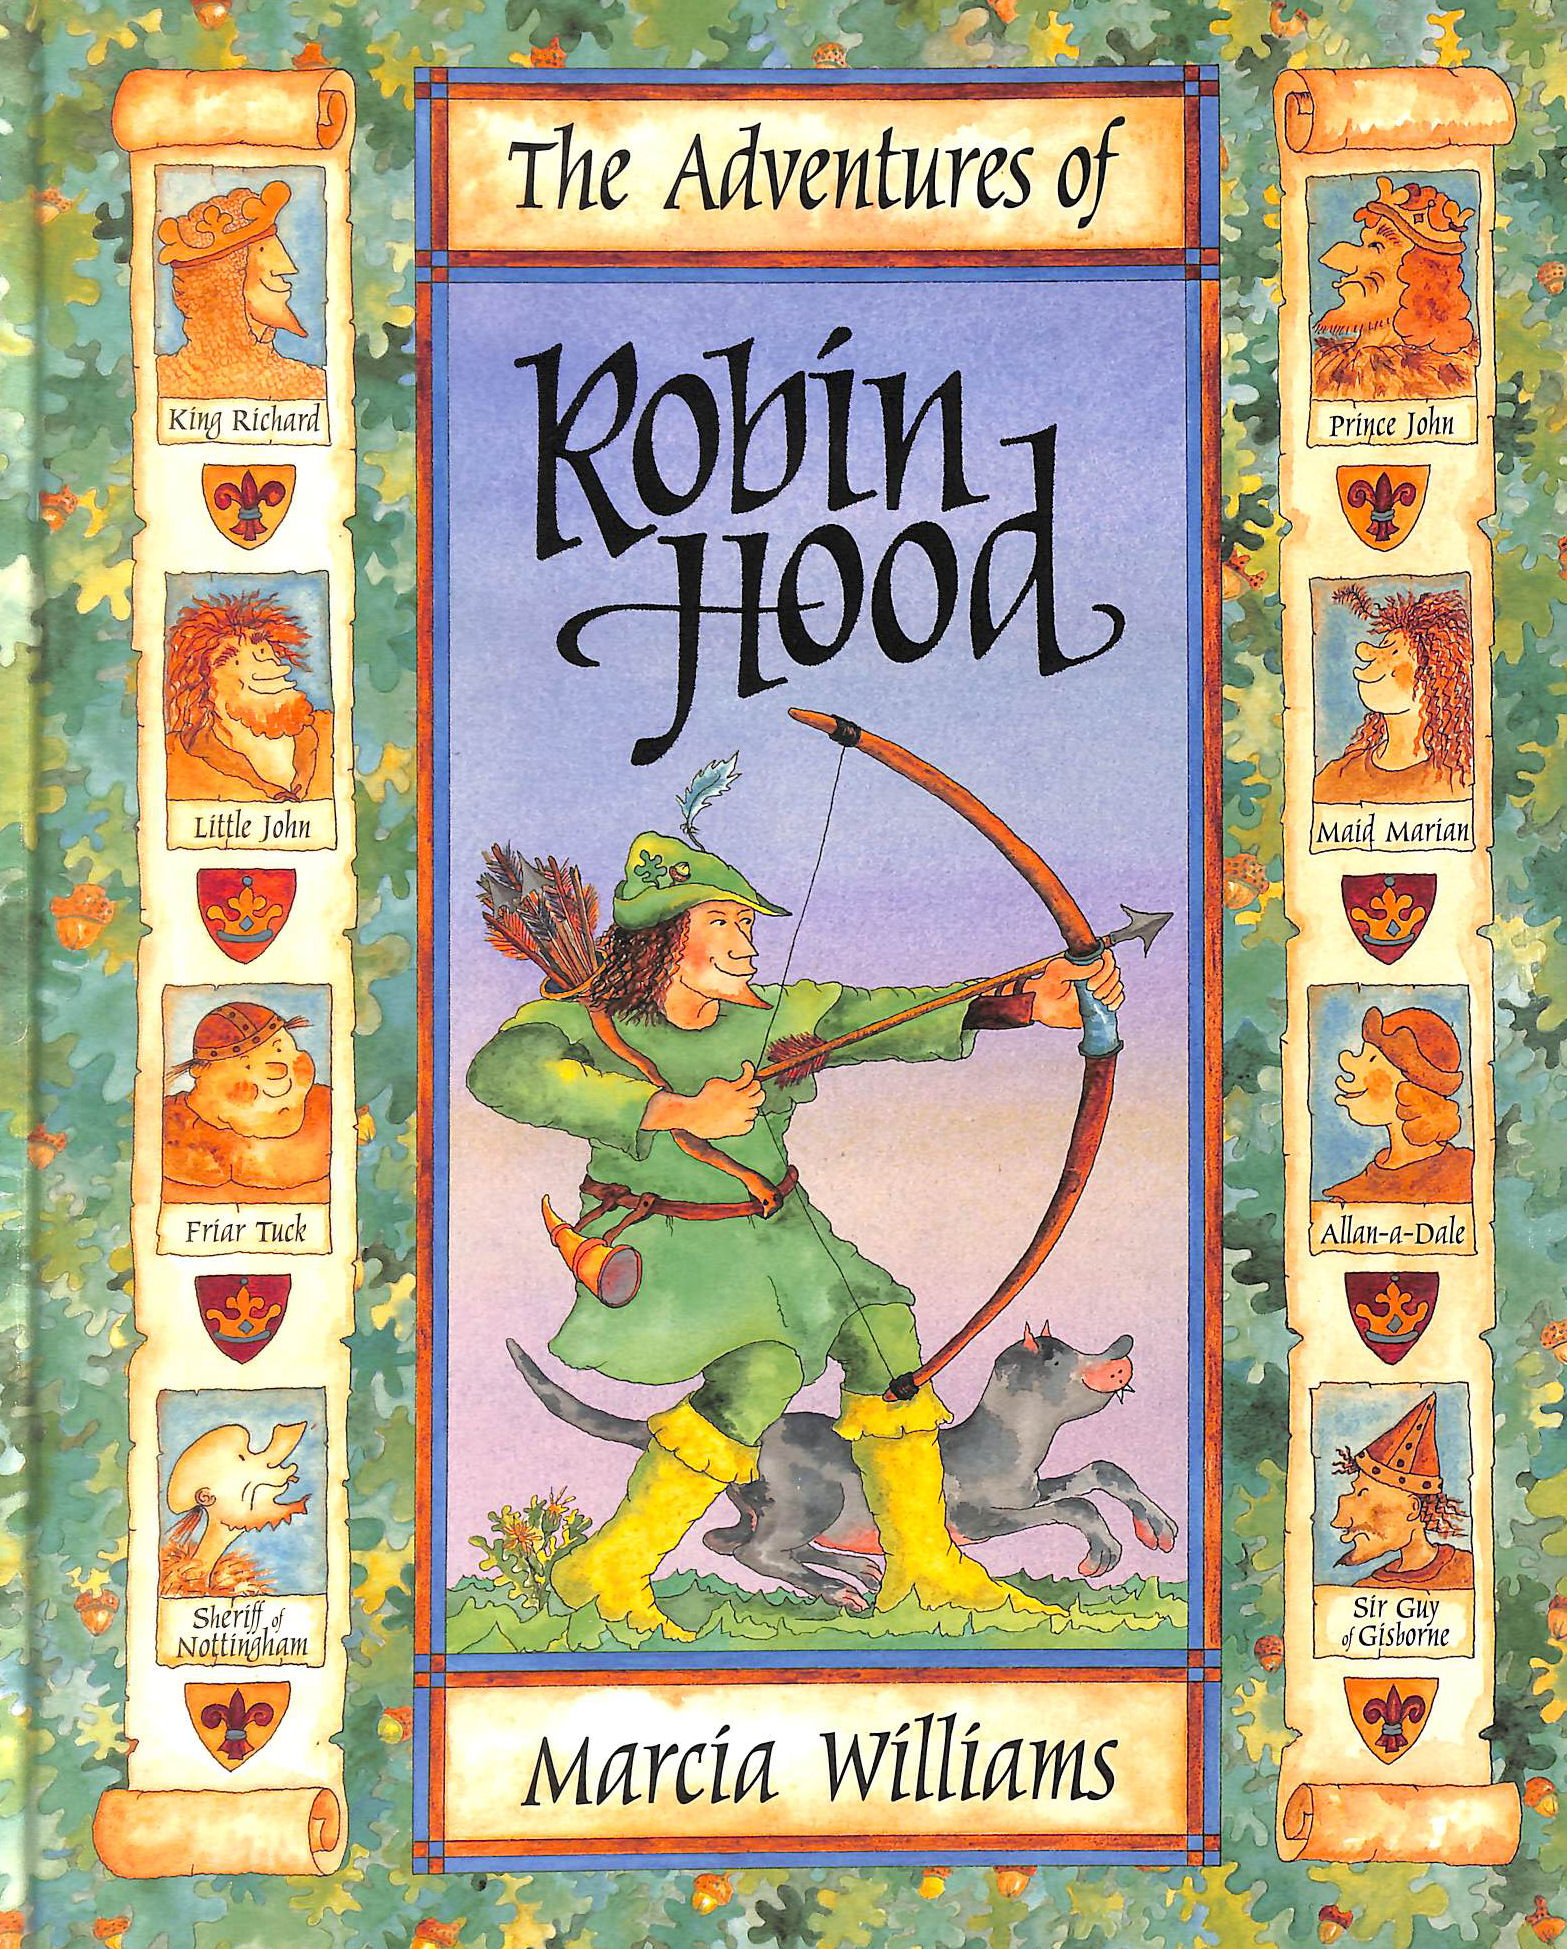 WILLIAMS MARCIA - The Adventures of Robin Hood